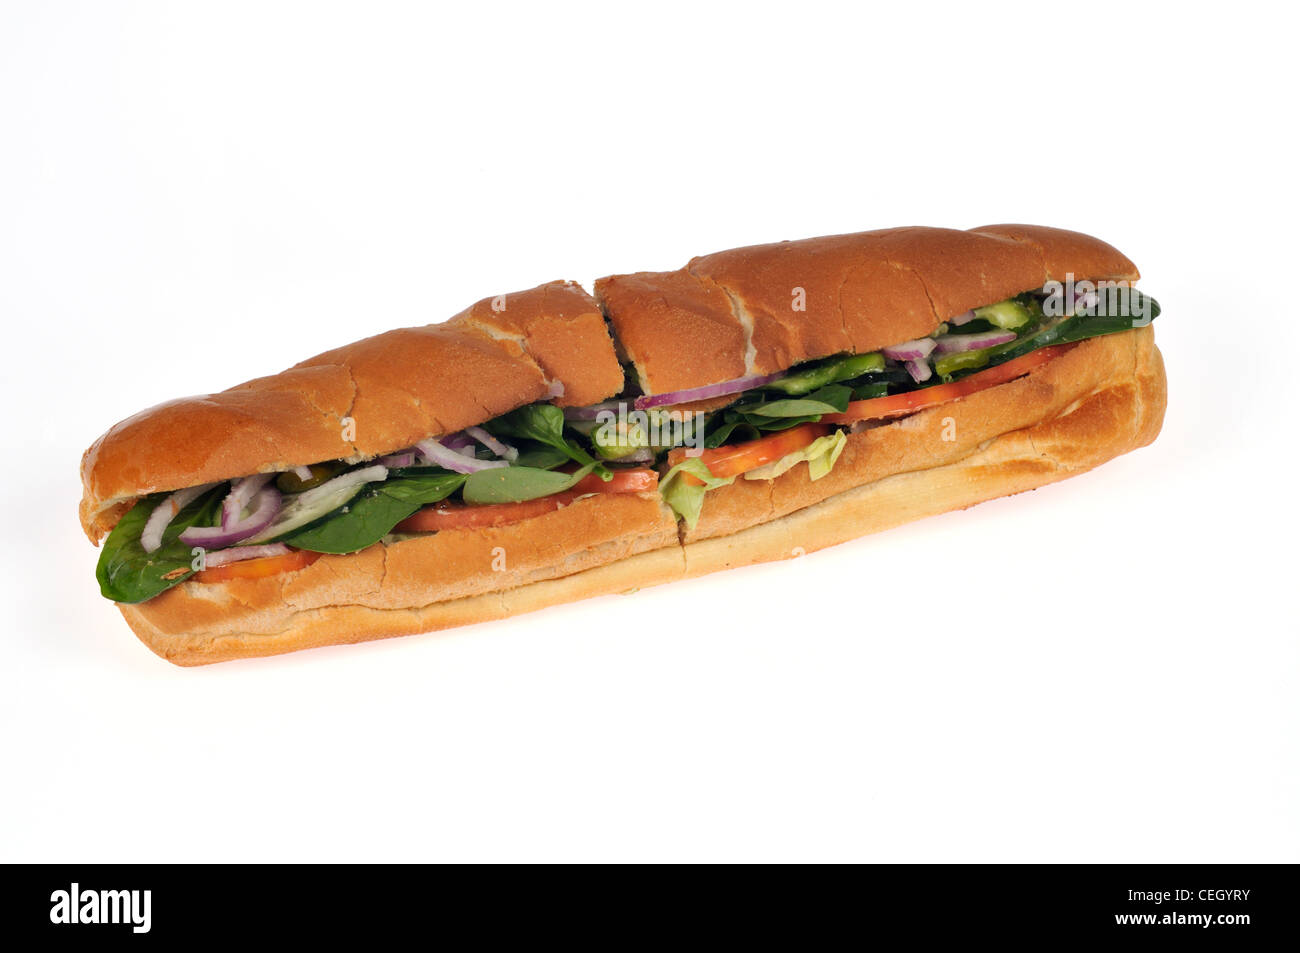 Subway Veggie delite footlong submarine sandwich on white background cutout USA Stock Photo